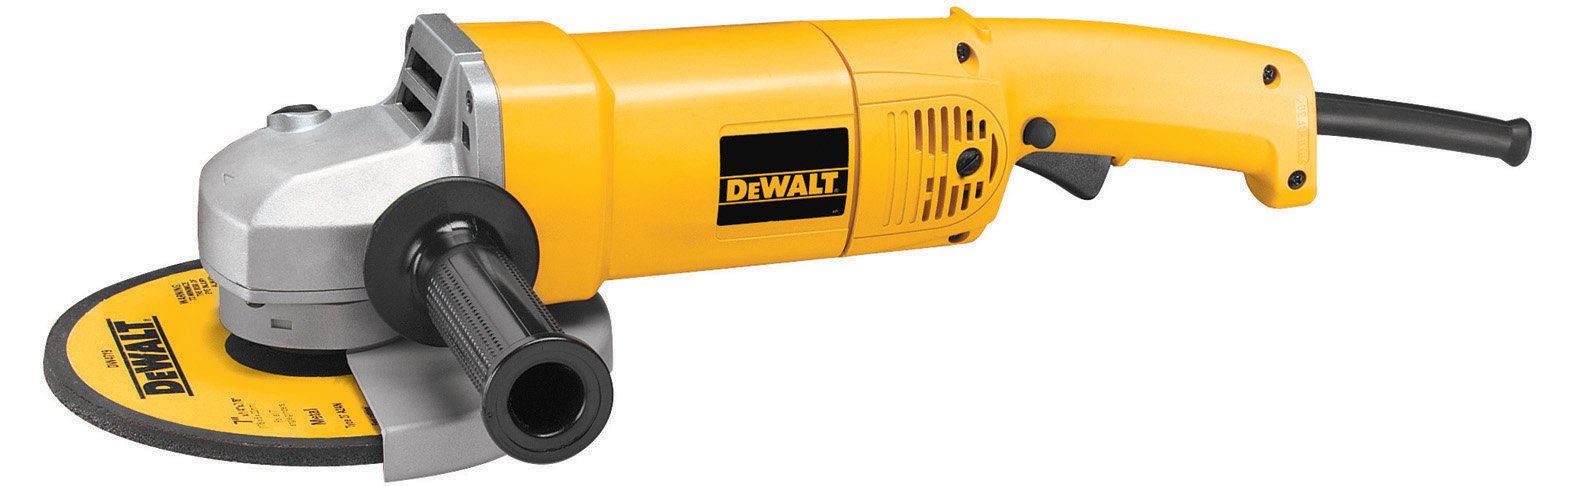 DEWALT Angle Grinder Tool, 7-Inch, 13-Amp (DW840), Yellow